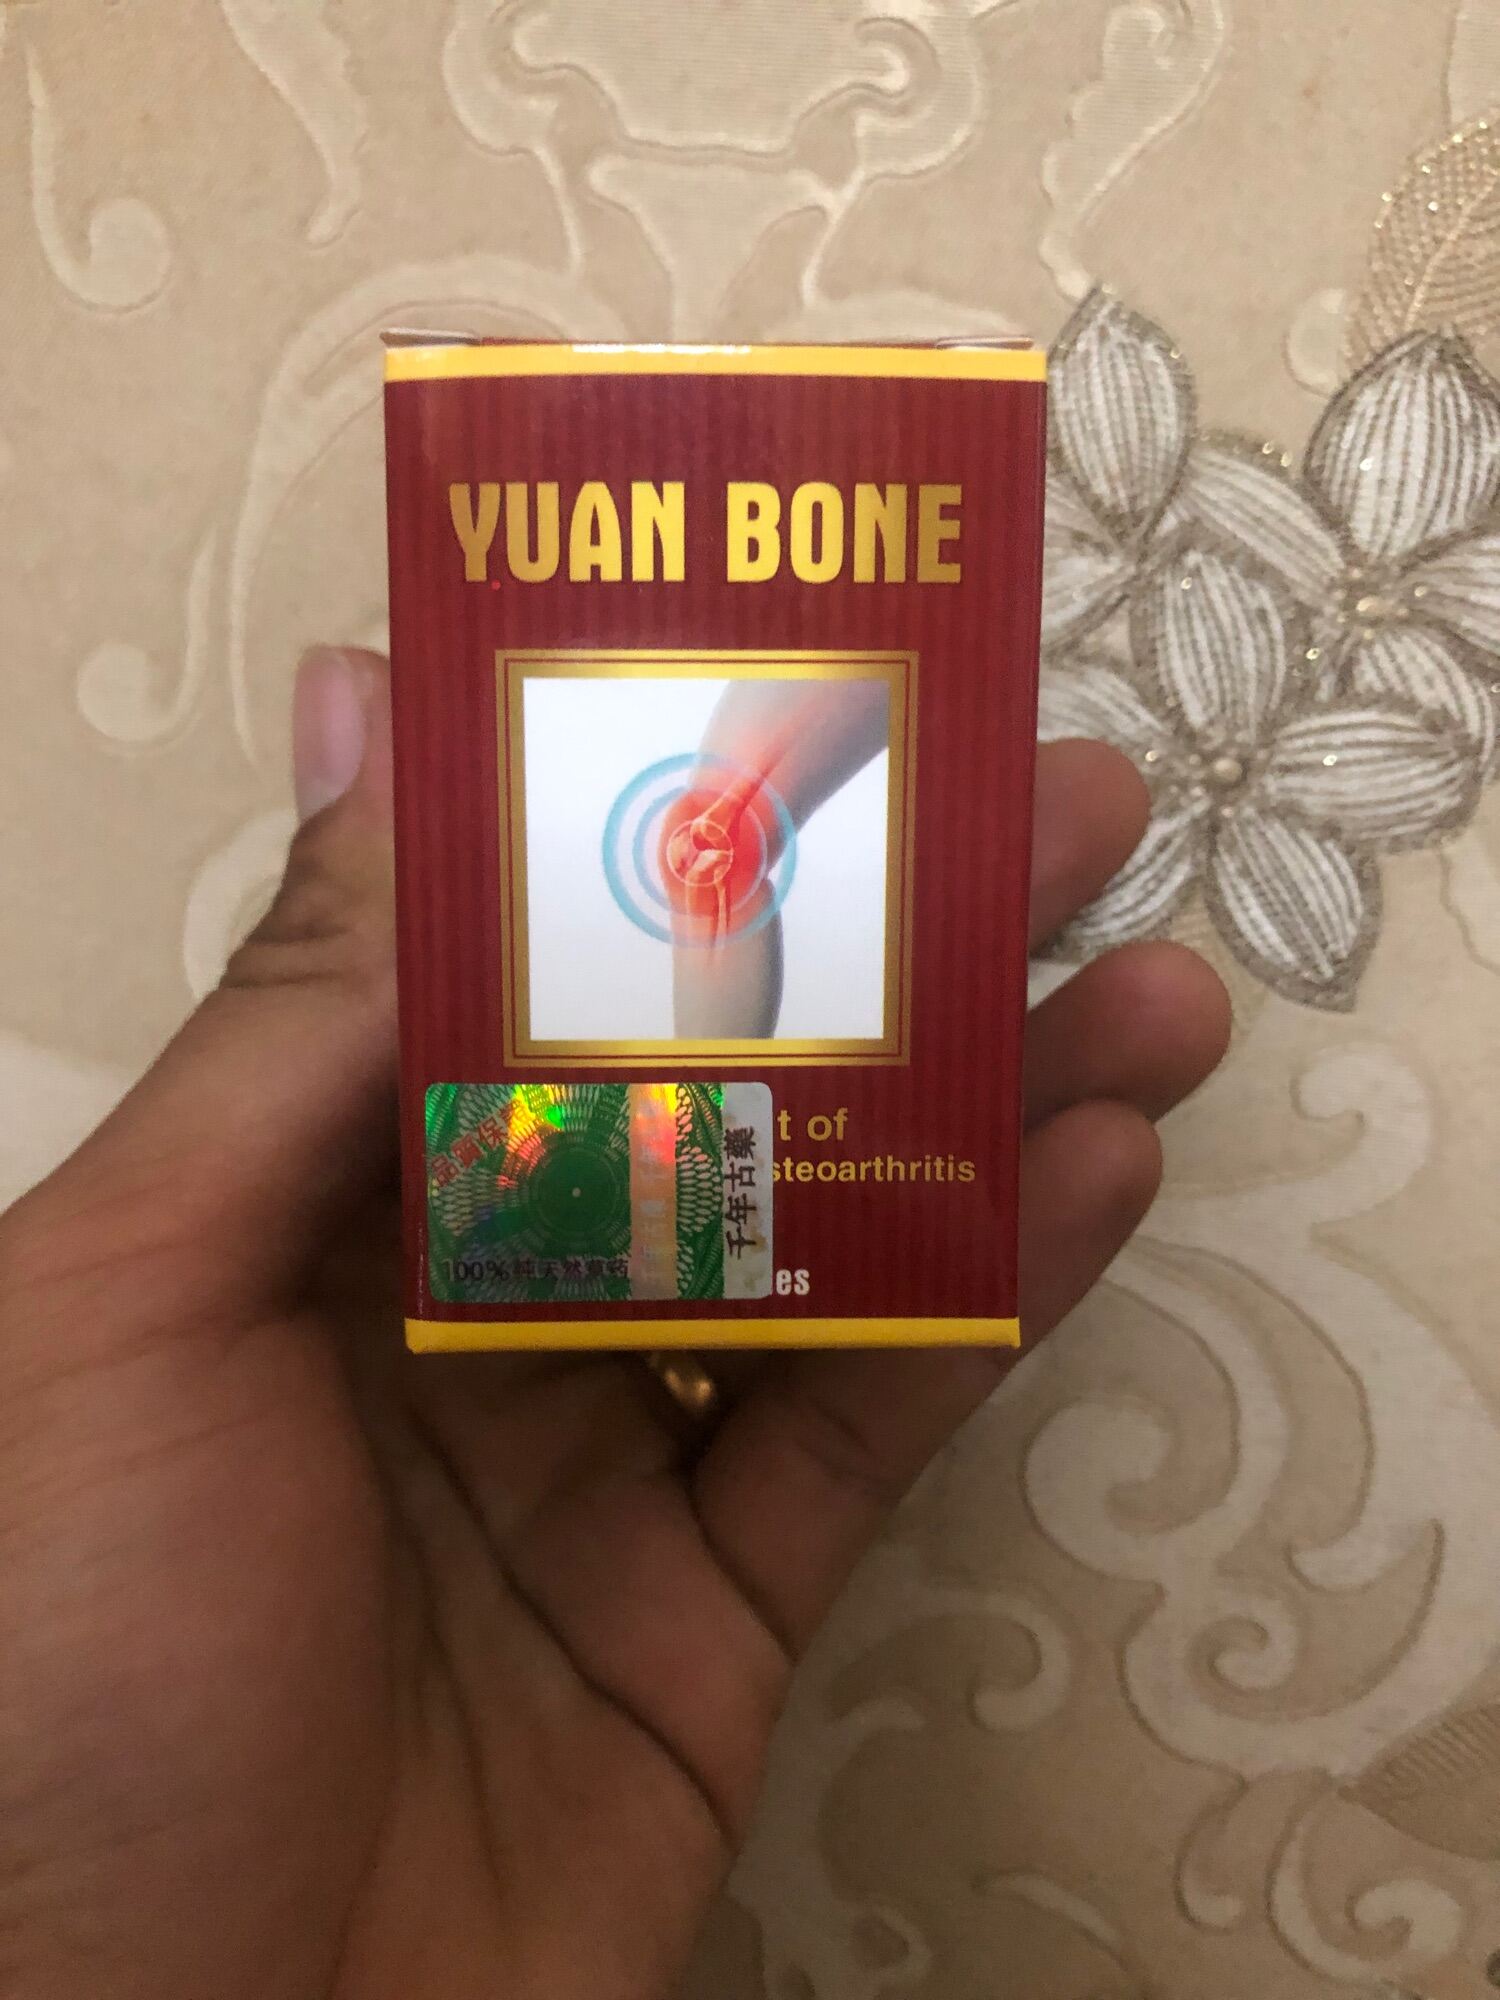 Yuan bone